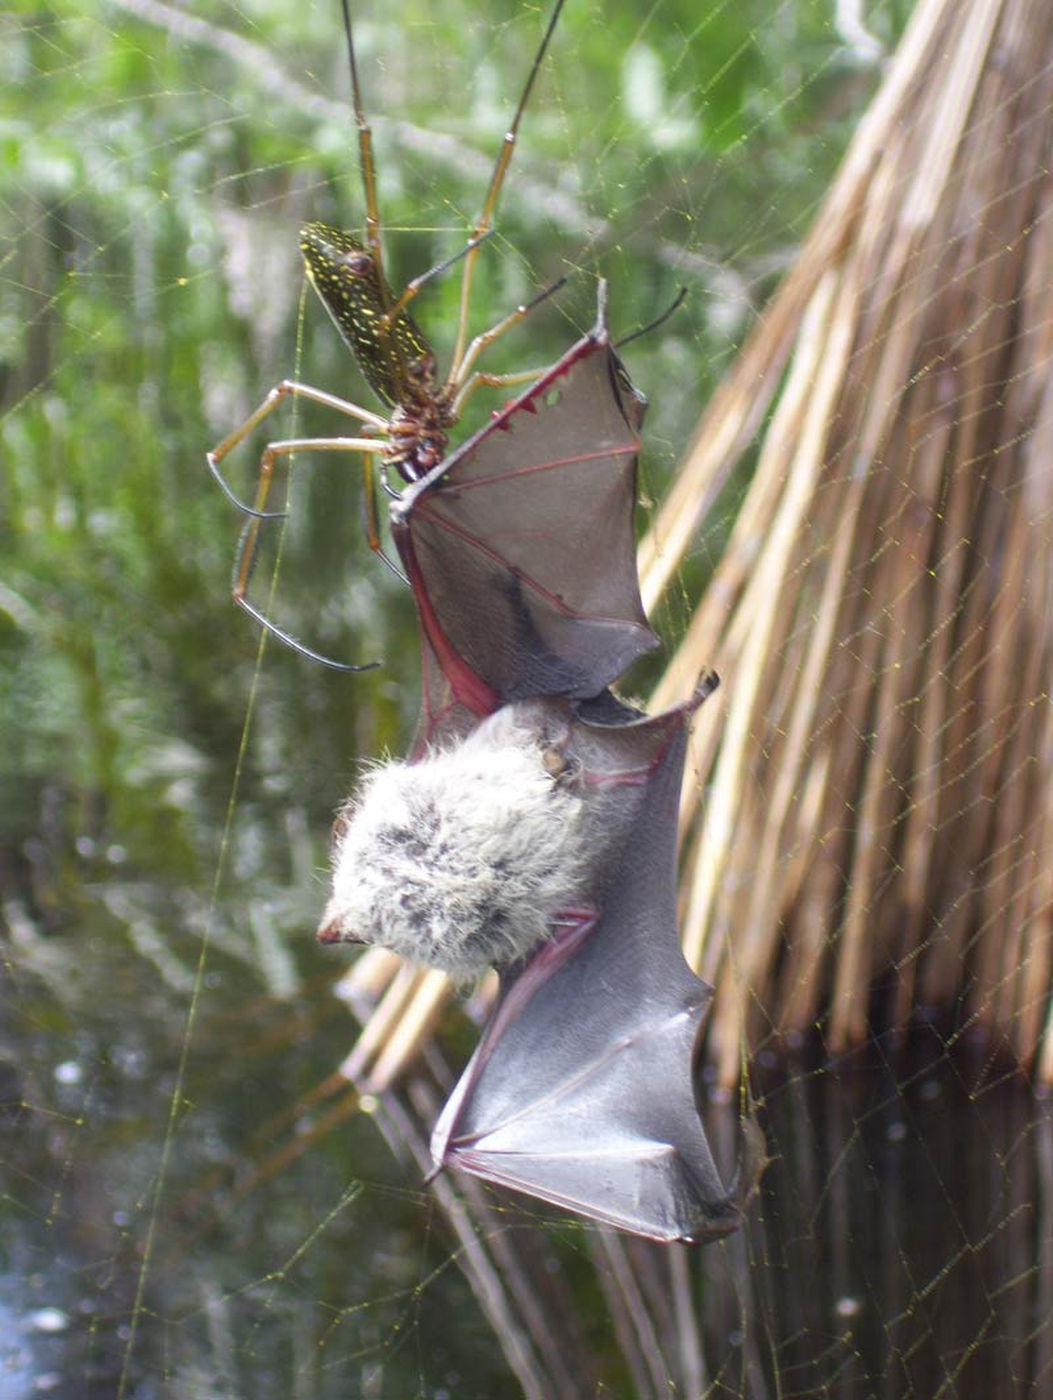 A Bat-Eating Spider.